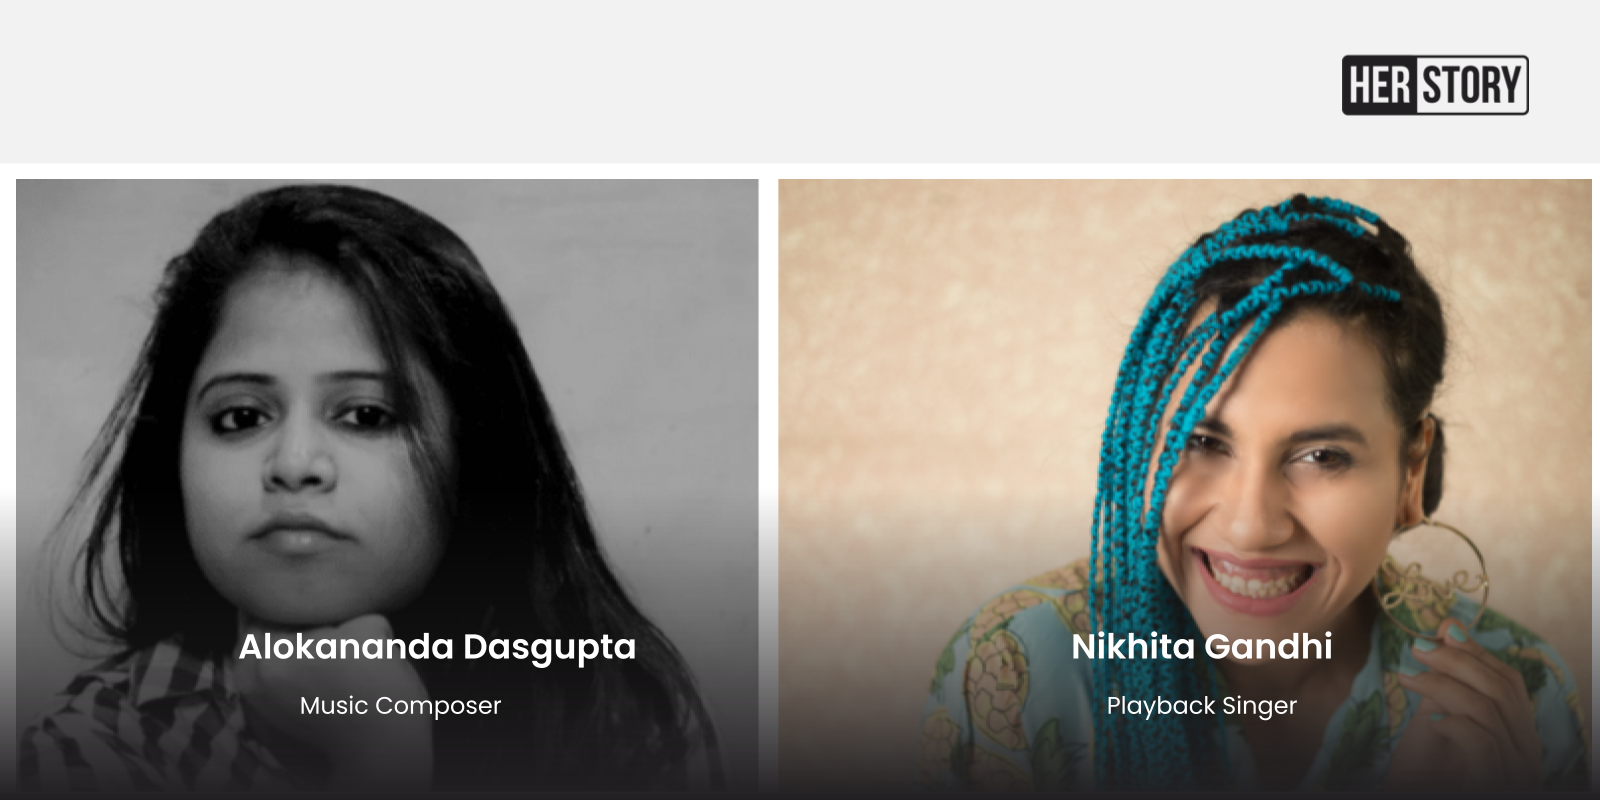 Talking music with Alokananda Dasgupta and Nikhita Gandhi - how Spotify is shining the spotlight on women with AmplifiHER